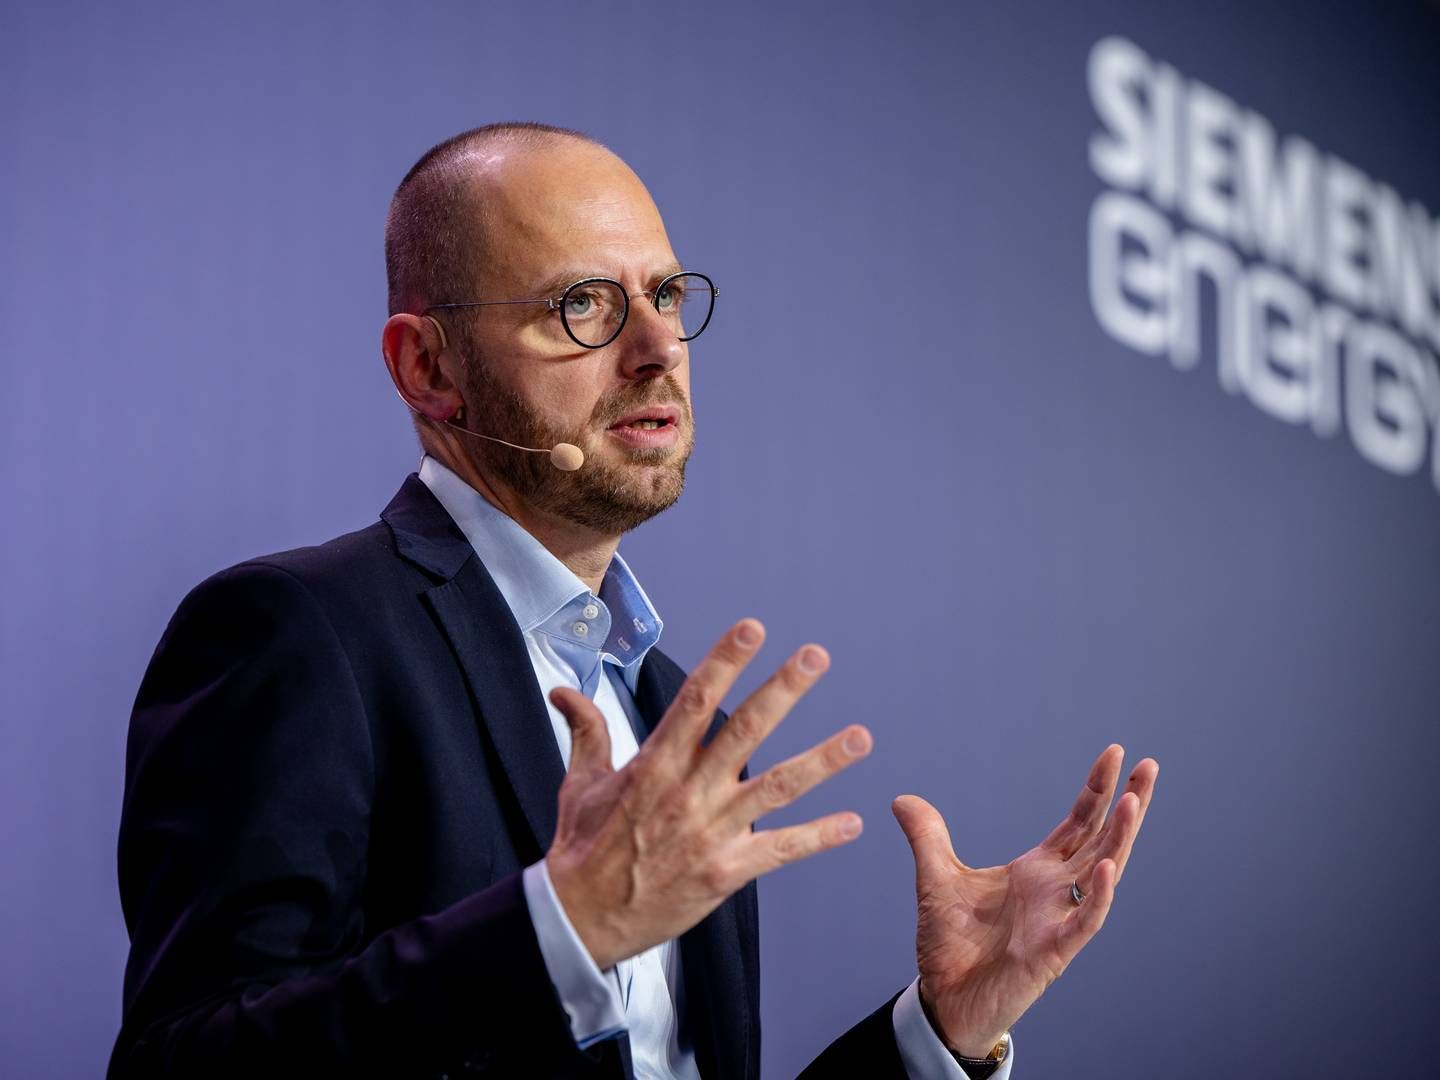 Adm. direktør i Siemens Energy, Christian Bruch. | Foto: Siemens Energy